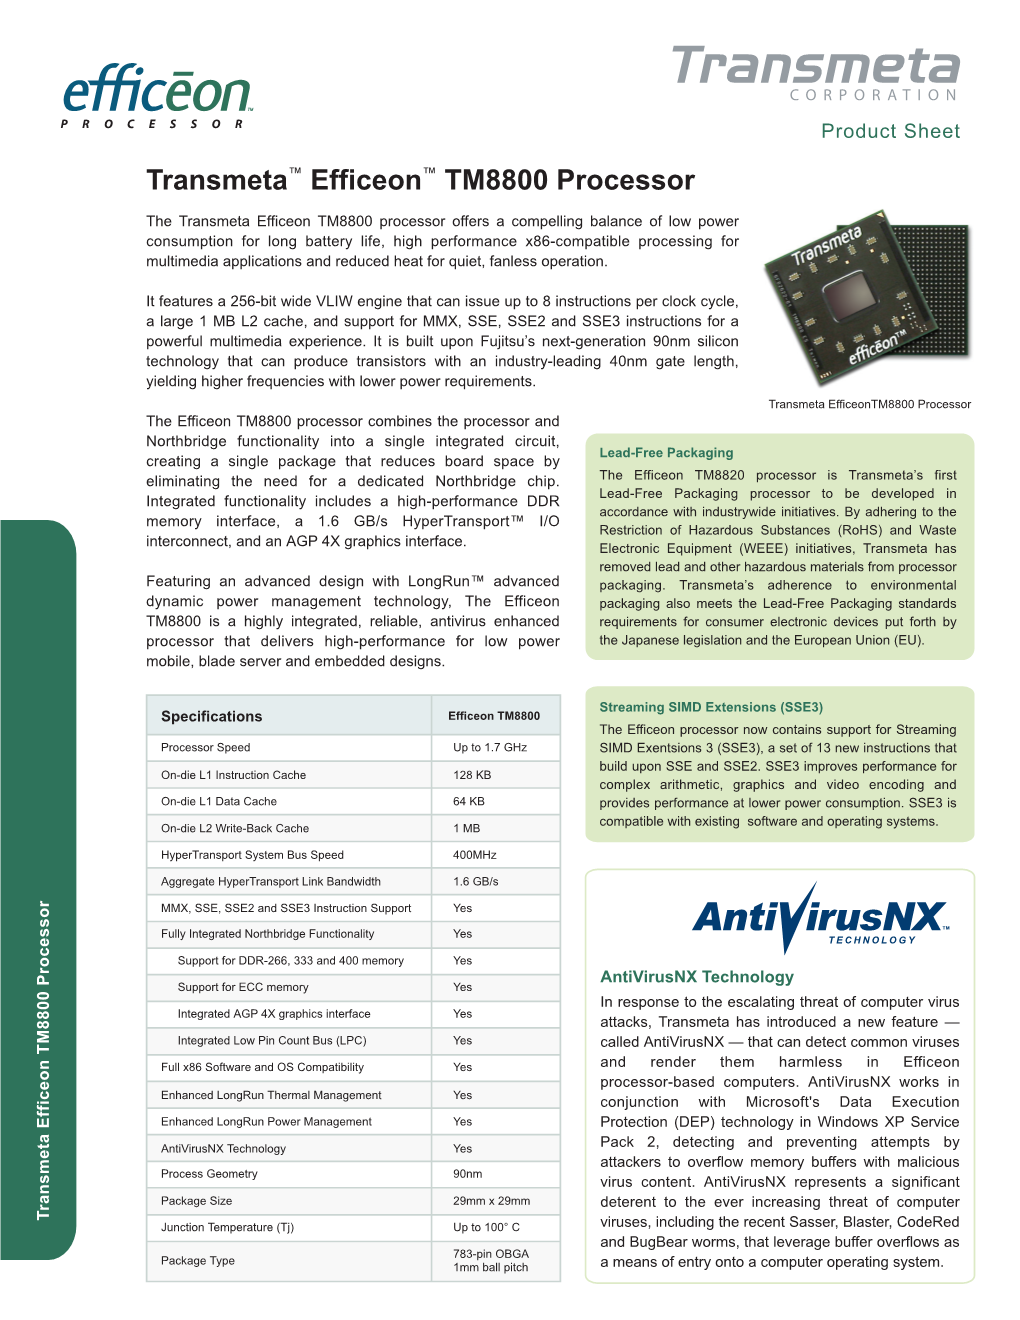 Transmeta Efficeon TM8800 Processor Mobile, Bladeserverandembeddeddesigns